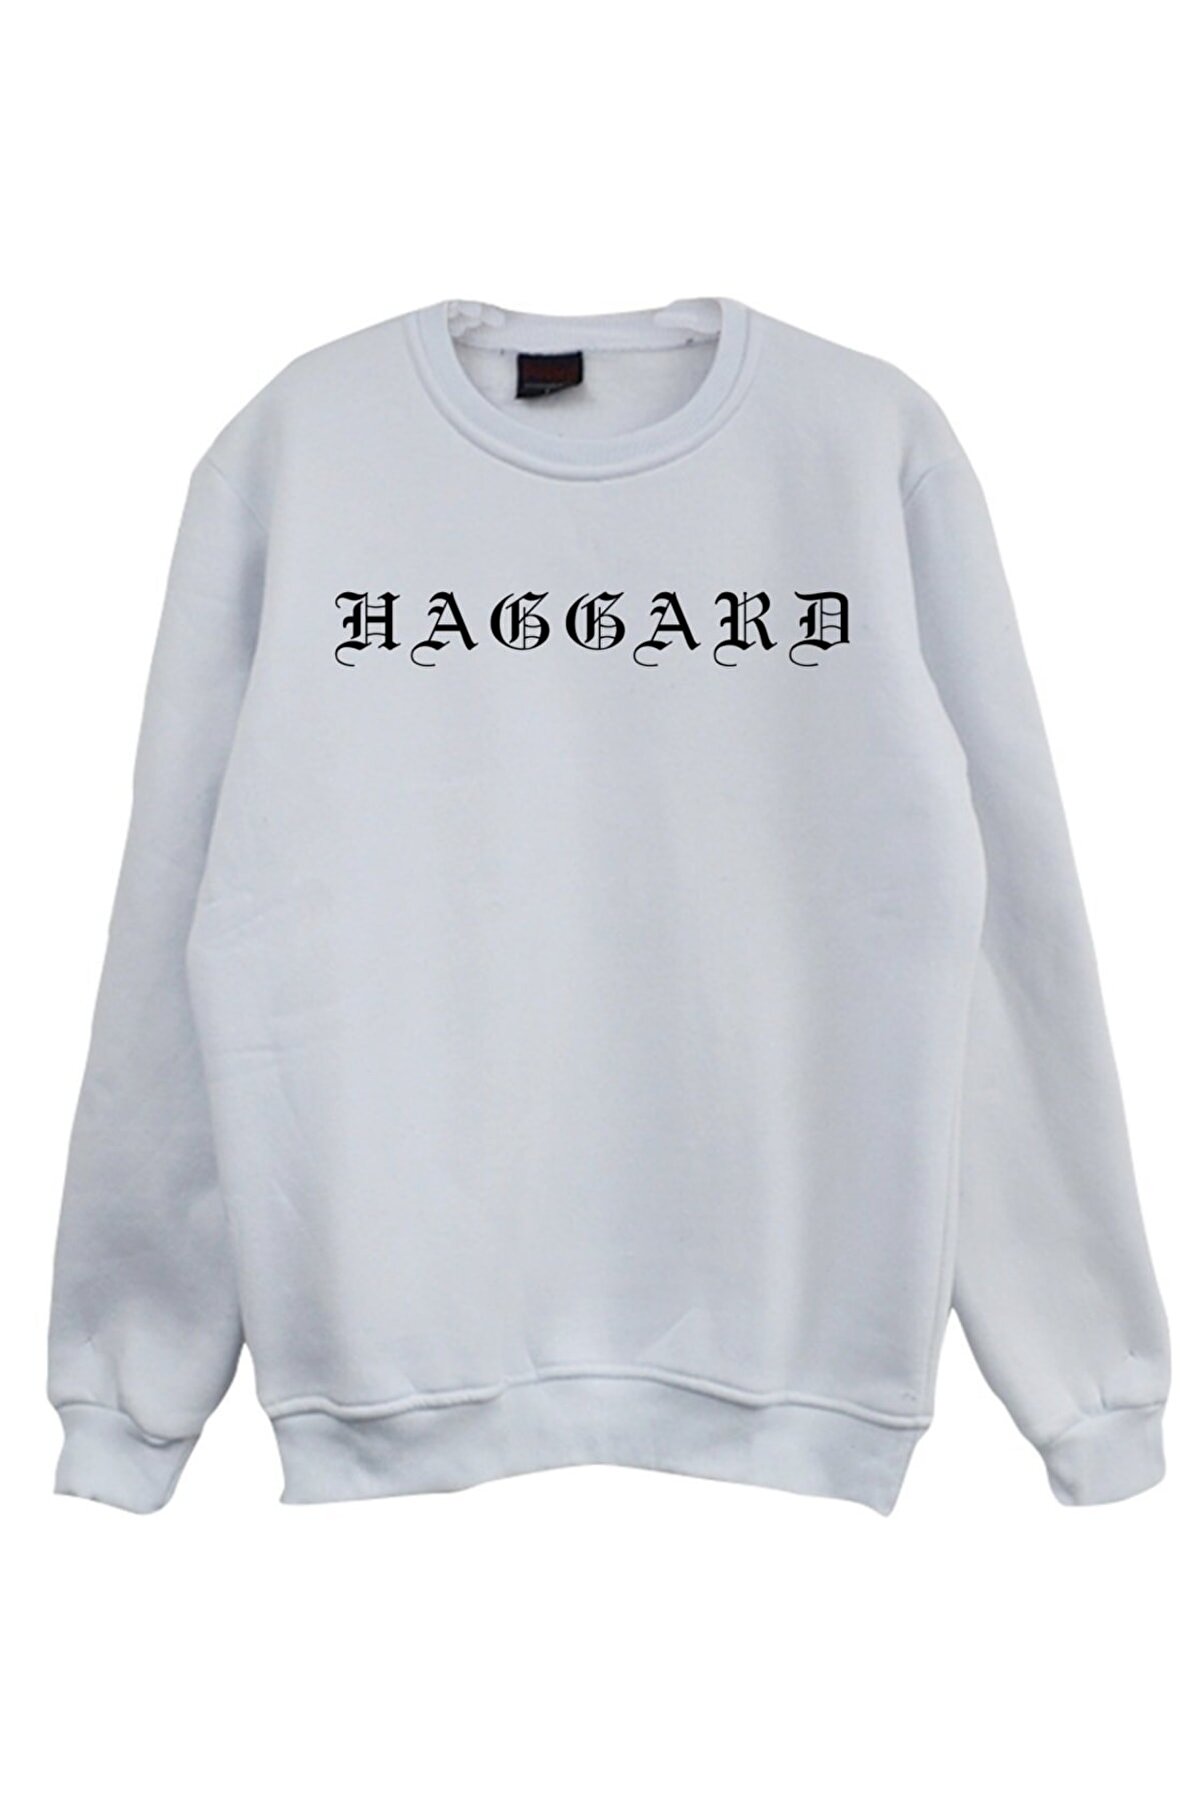 fame-stoned Haggard Baskılı Sweatshirt